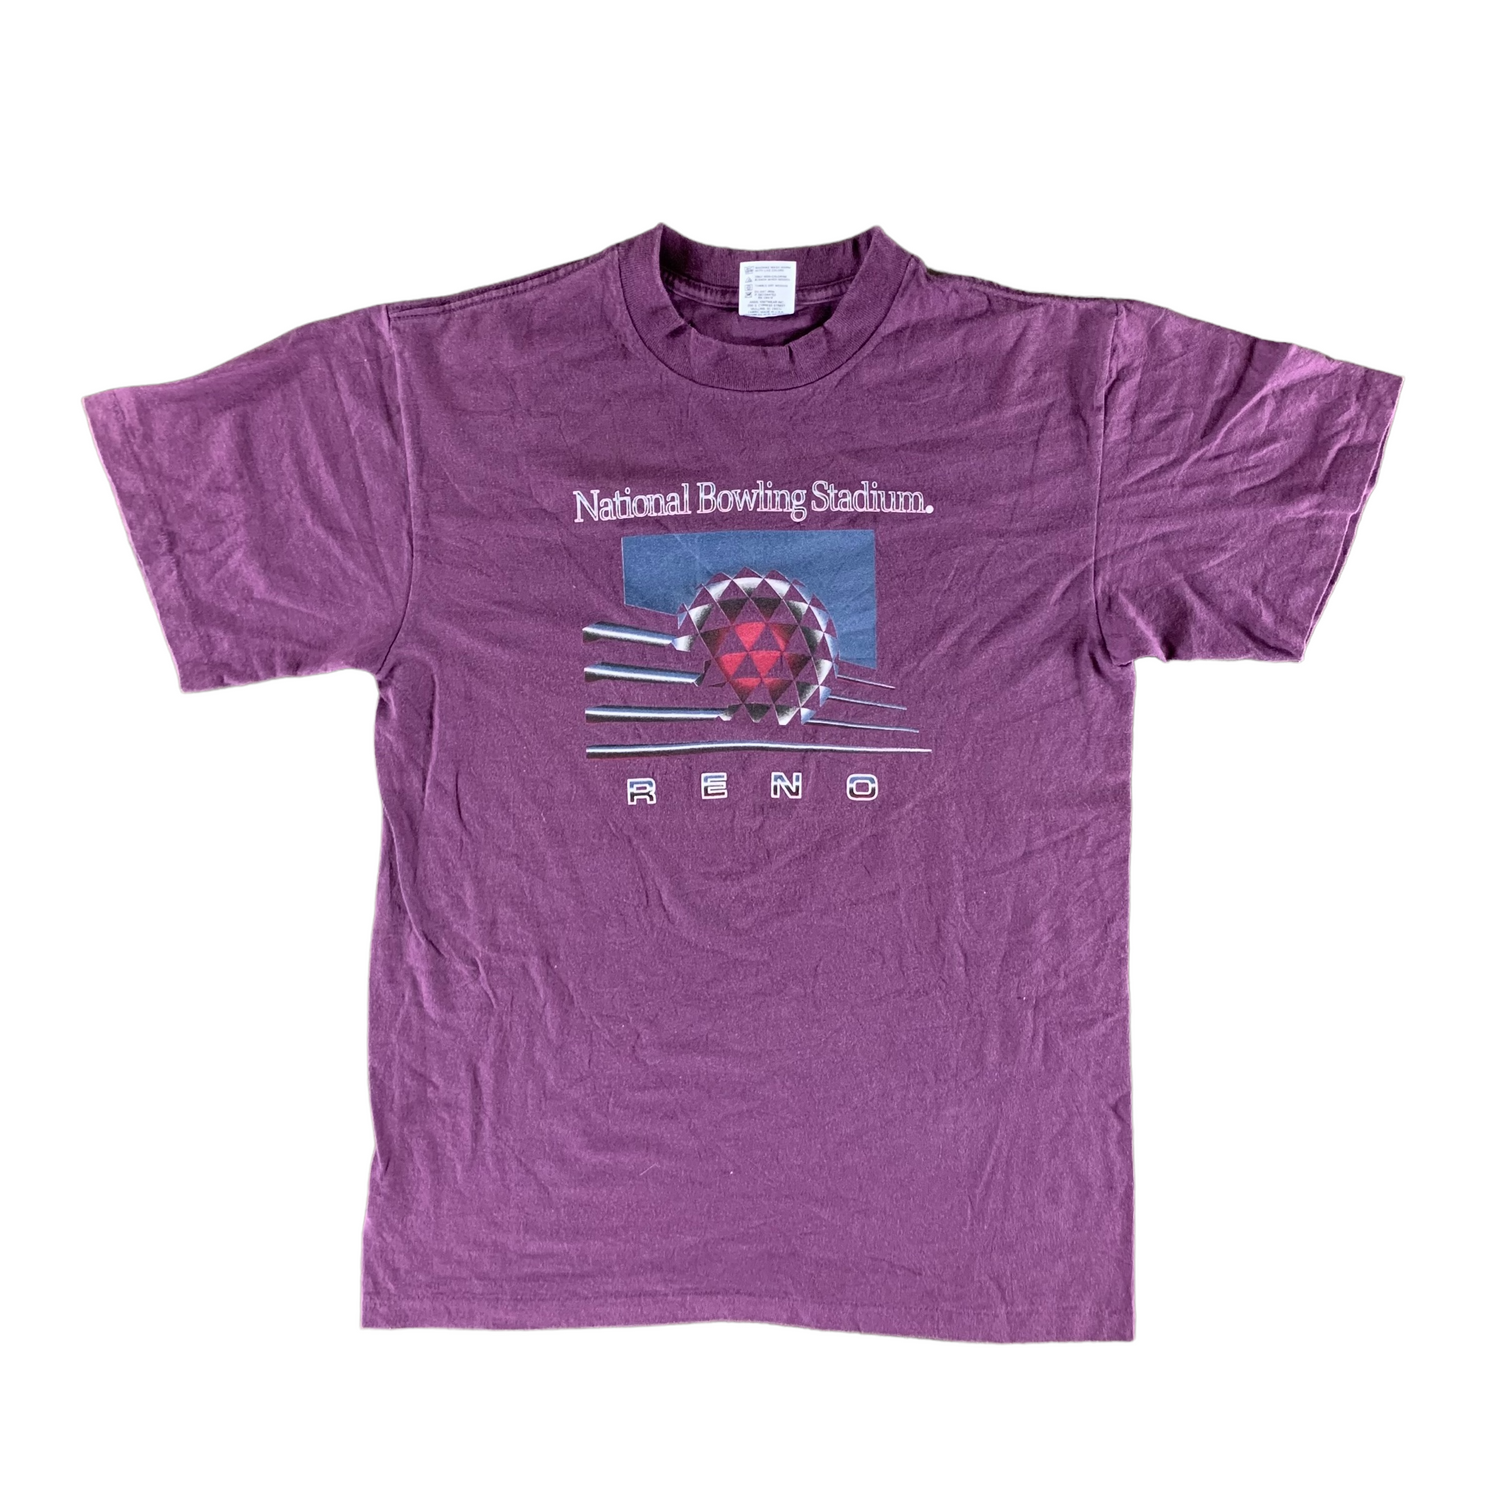 Vintage 1990s National Bowling Stadium T-shirt size Medium